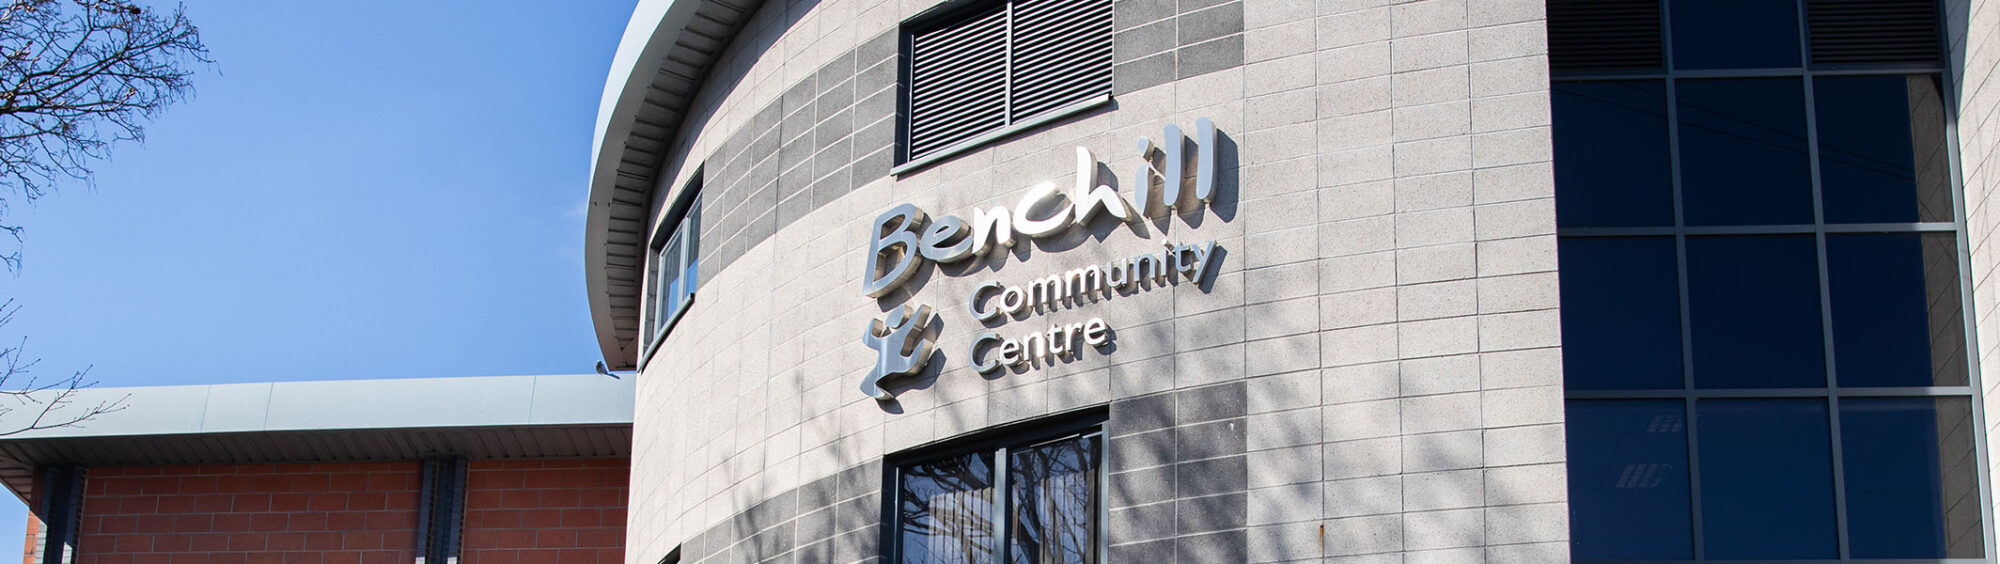 Contact Benchill Community Centre